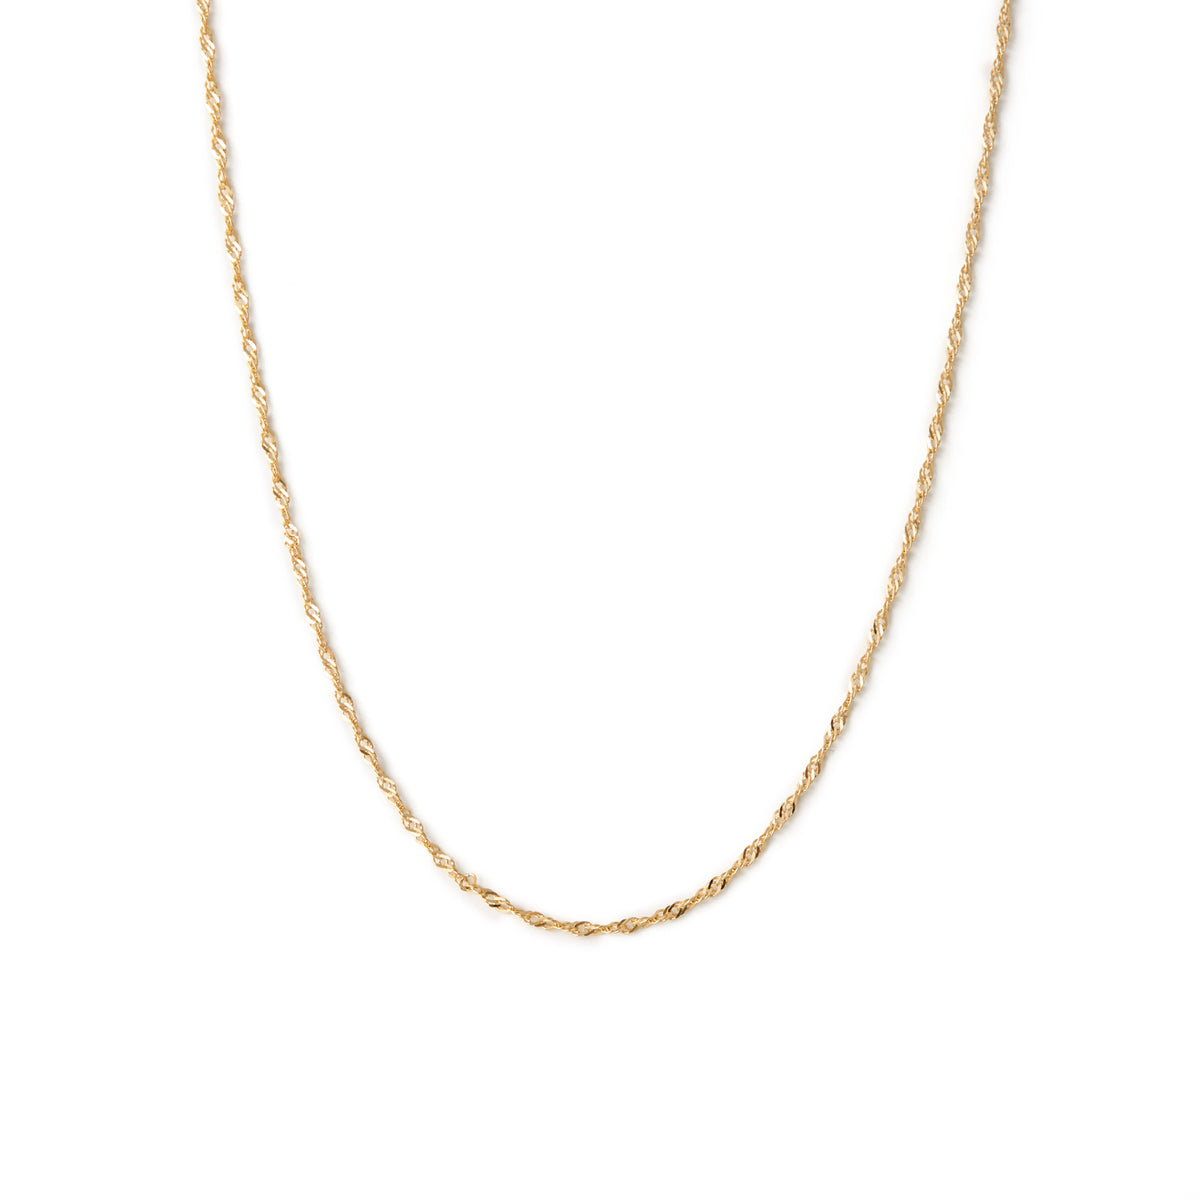 Torsade Necklace - 10 Karat Gold